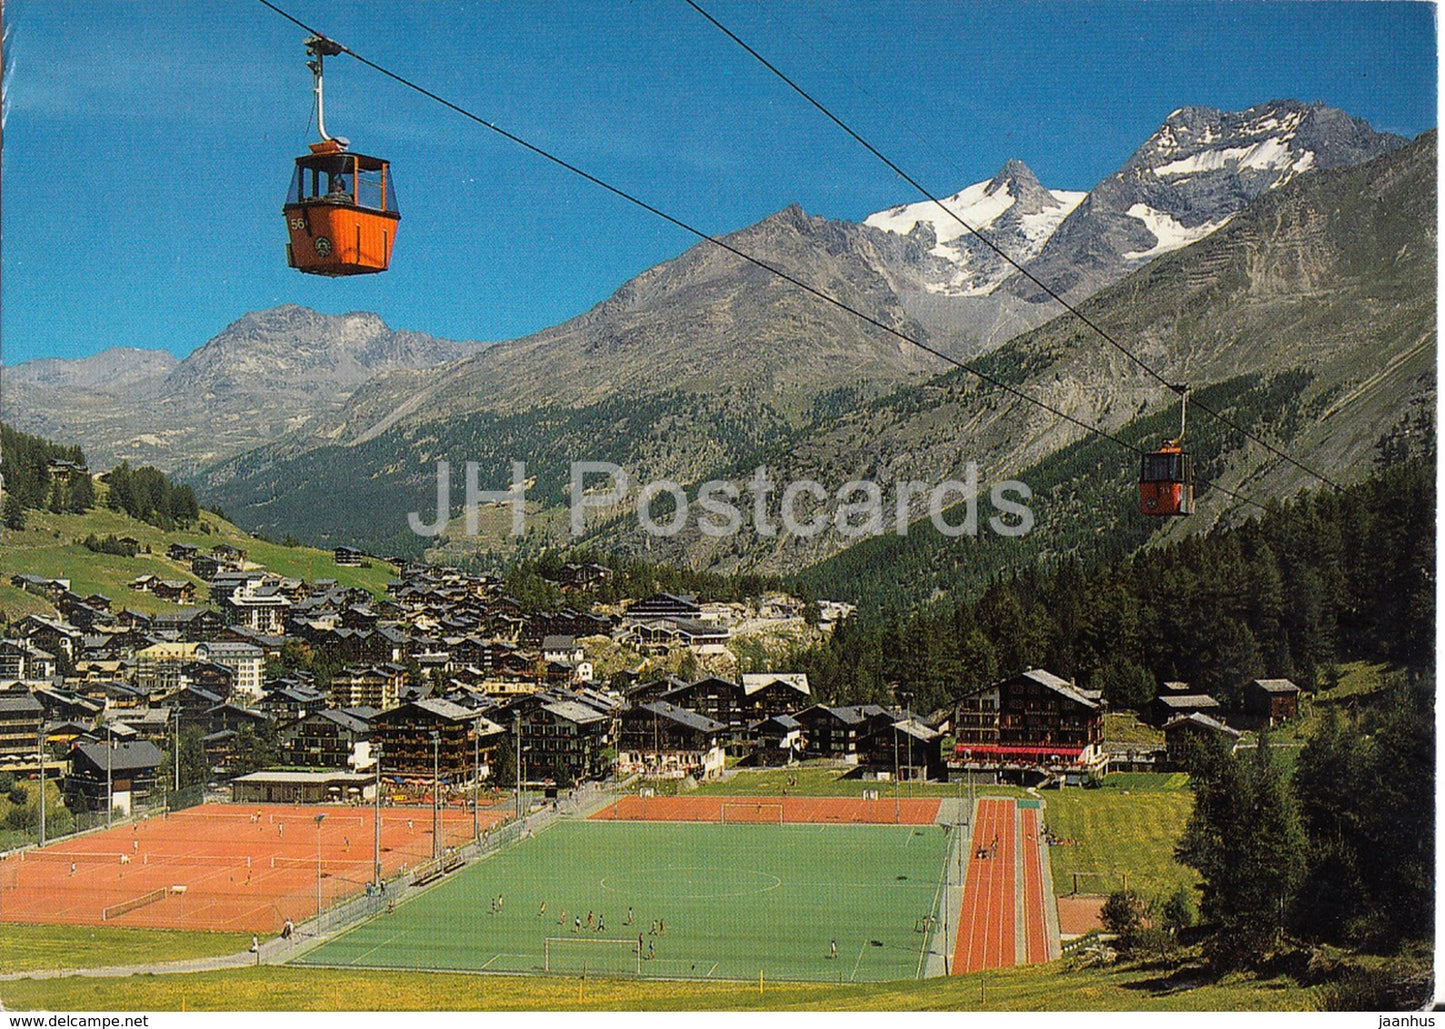 Saas Fee 1800 m - Fletschhorn - Lagginhorn - Wallis - football - tennis court - sport - 1988 - Switzerland - used - JH Postcards